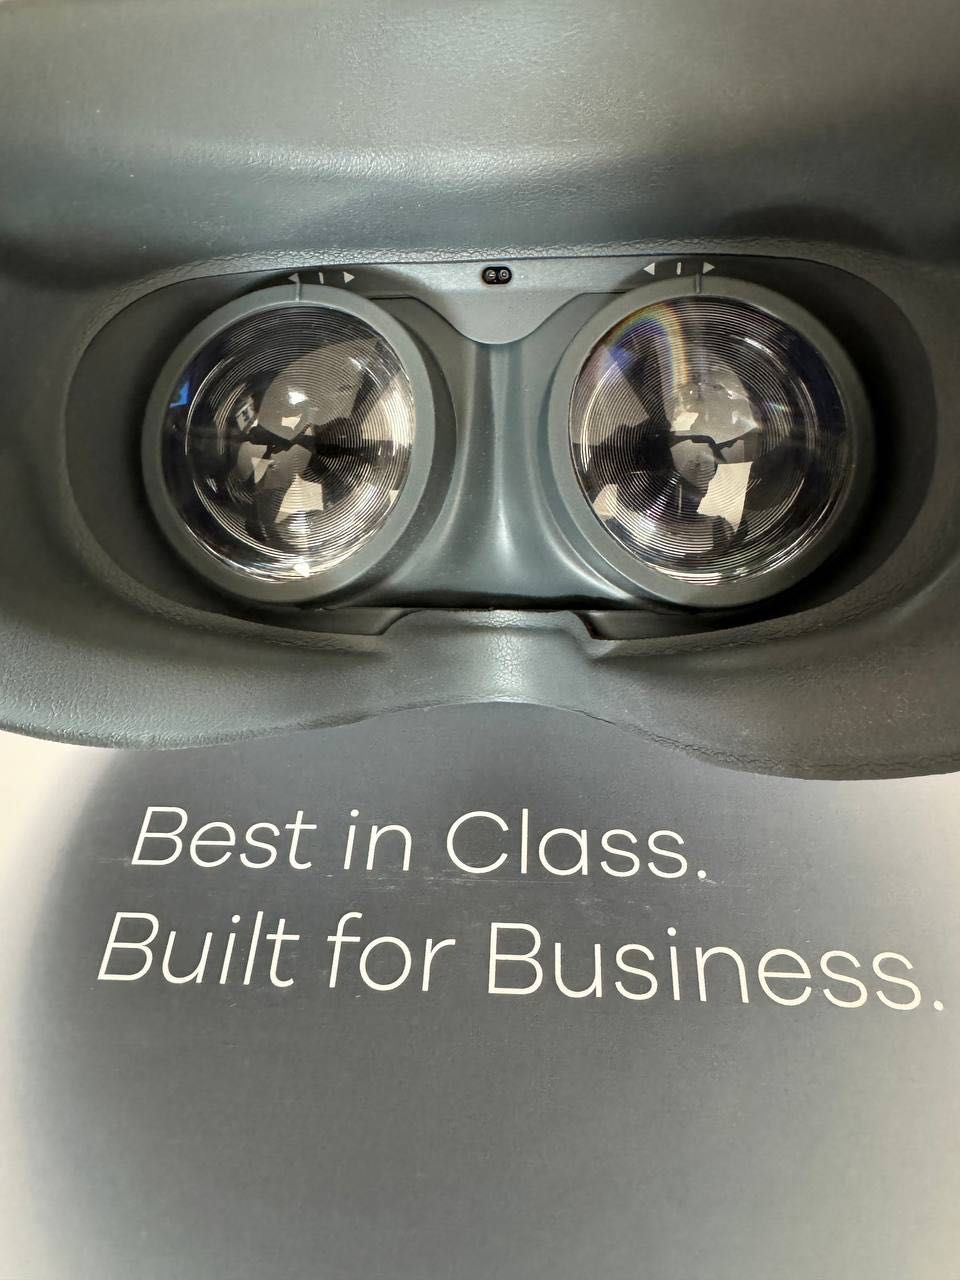 Pico neo 3 Pro VR очила